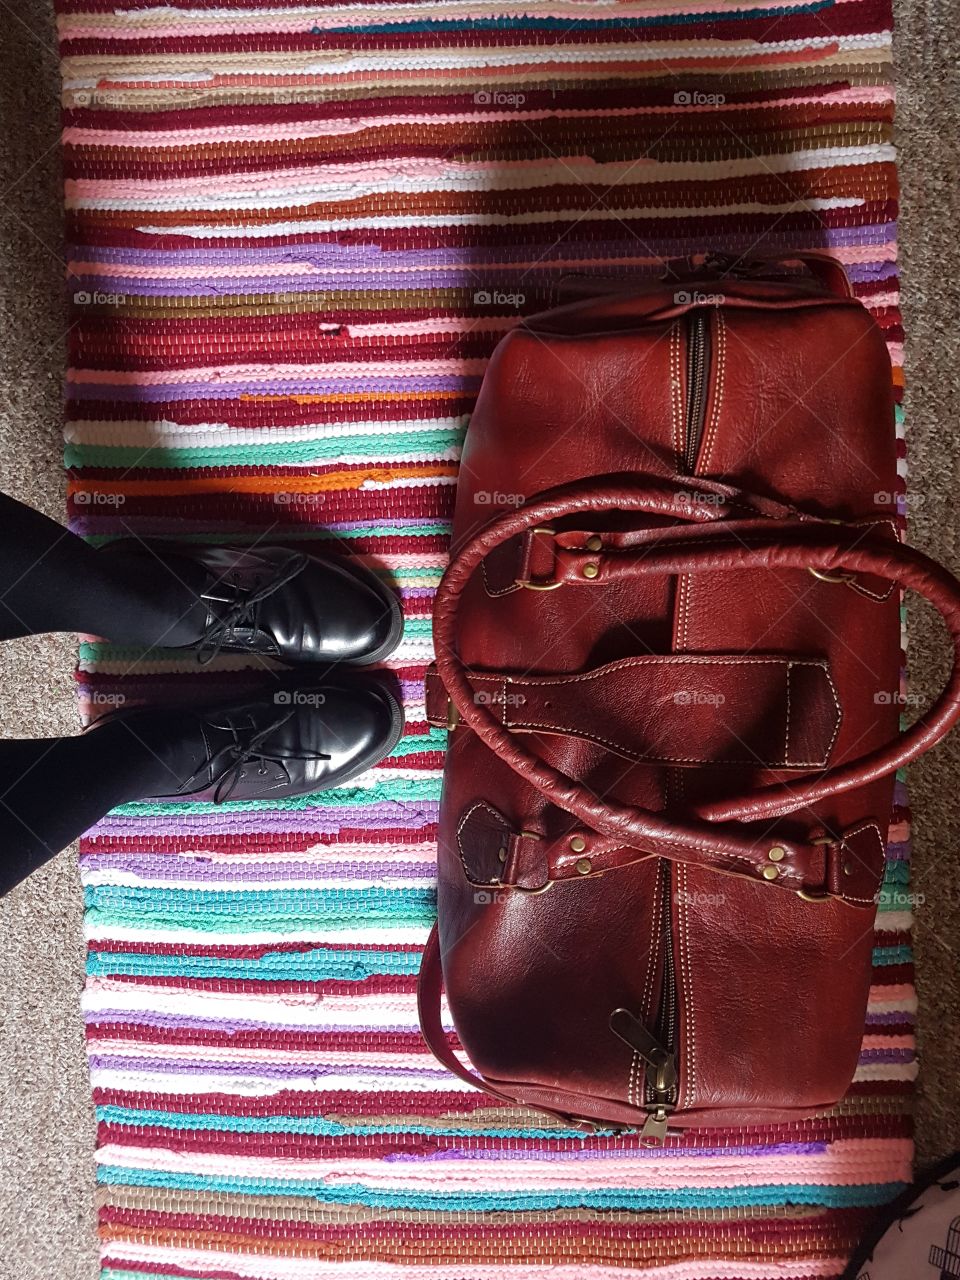 Travel bag, feet shot.